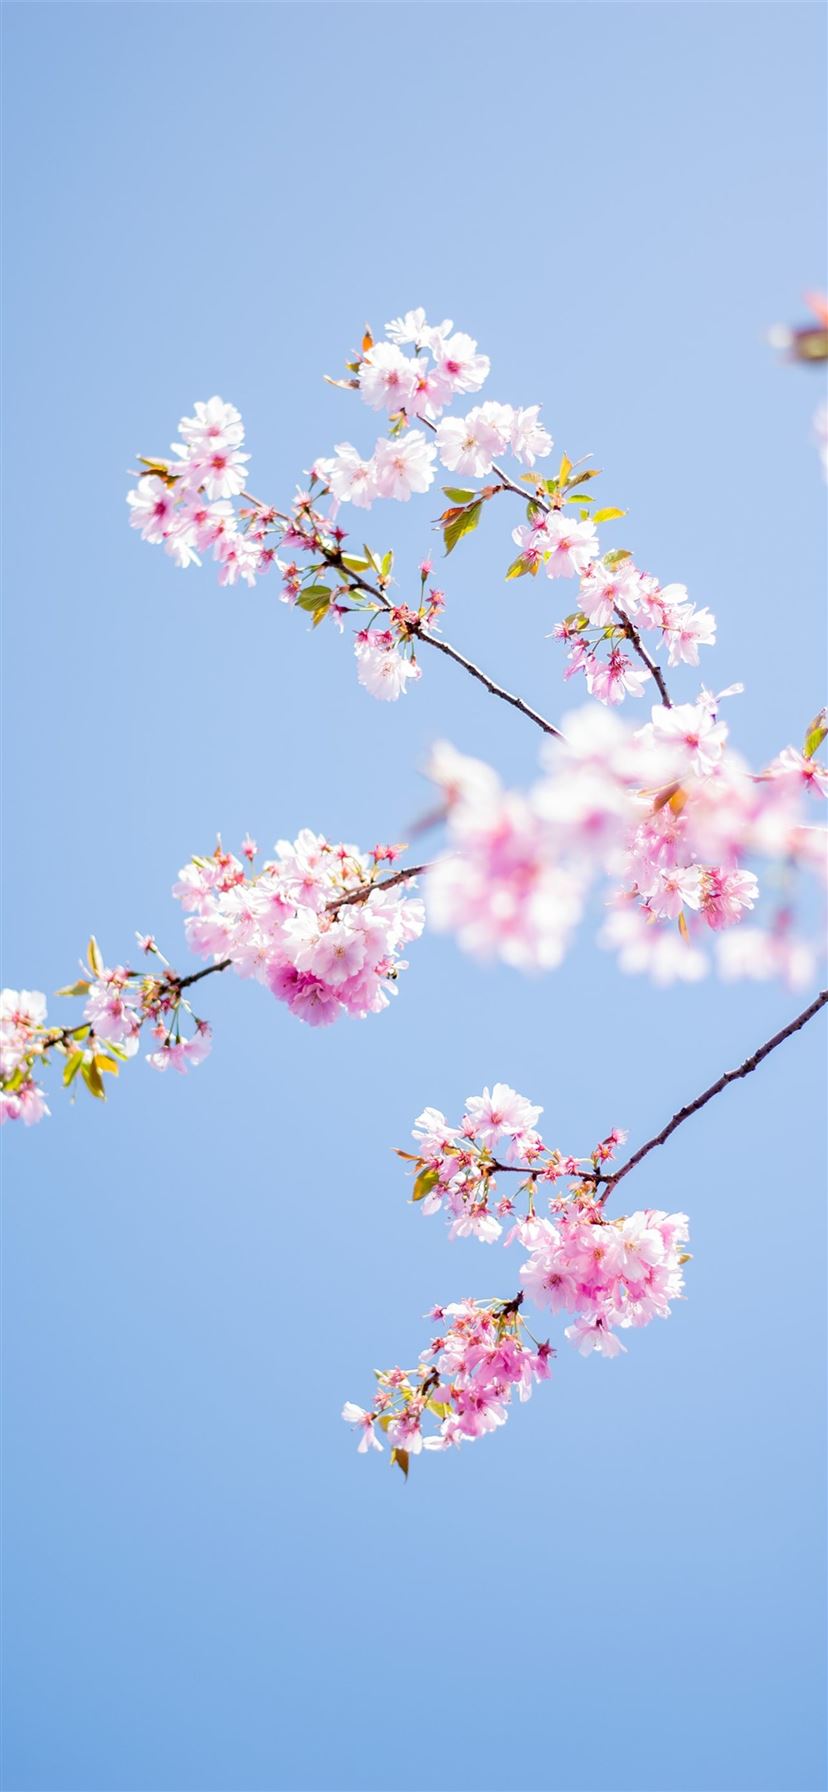 pink flowers tree iPhone 11 Wallpaper Free Download